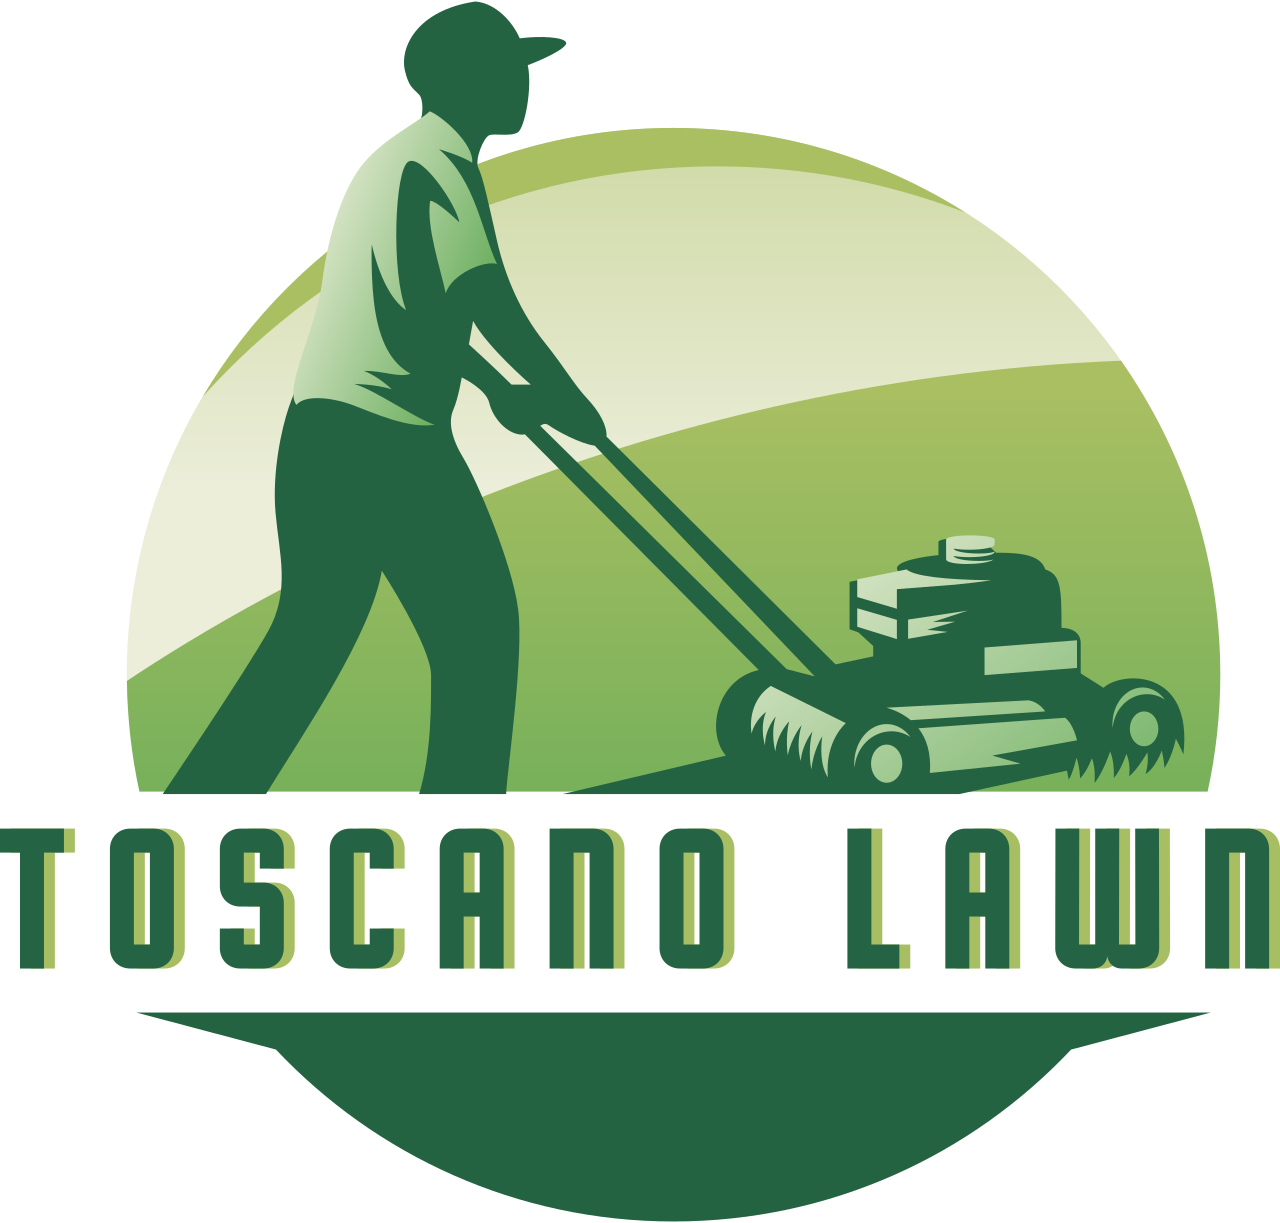 Toscano lawn 's logo